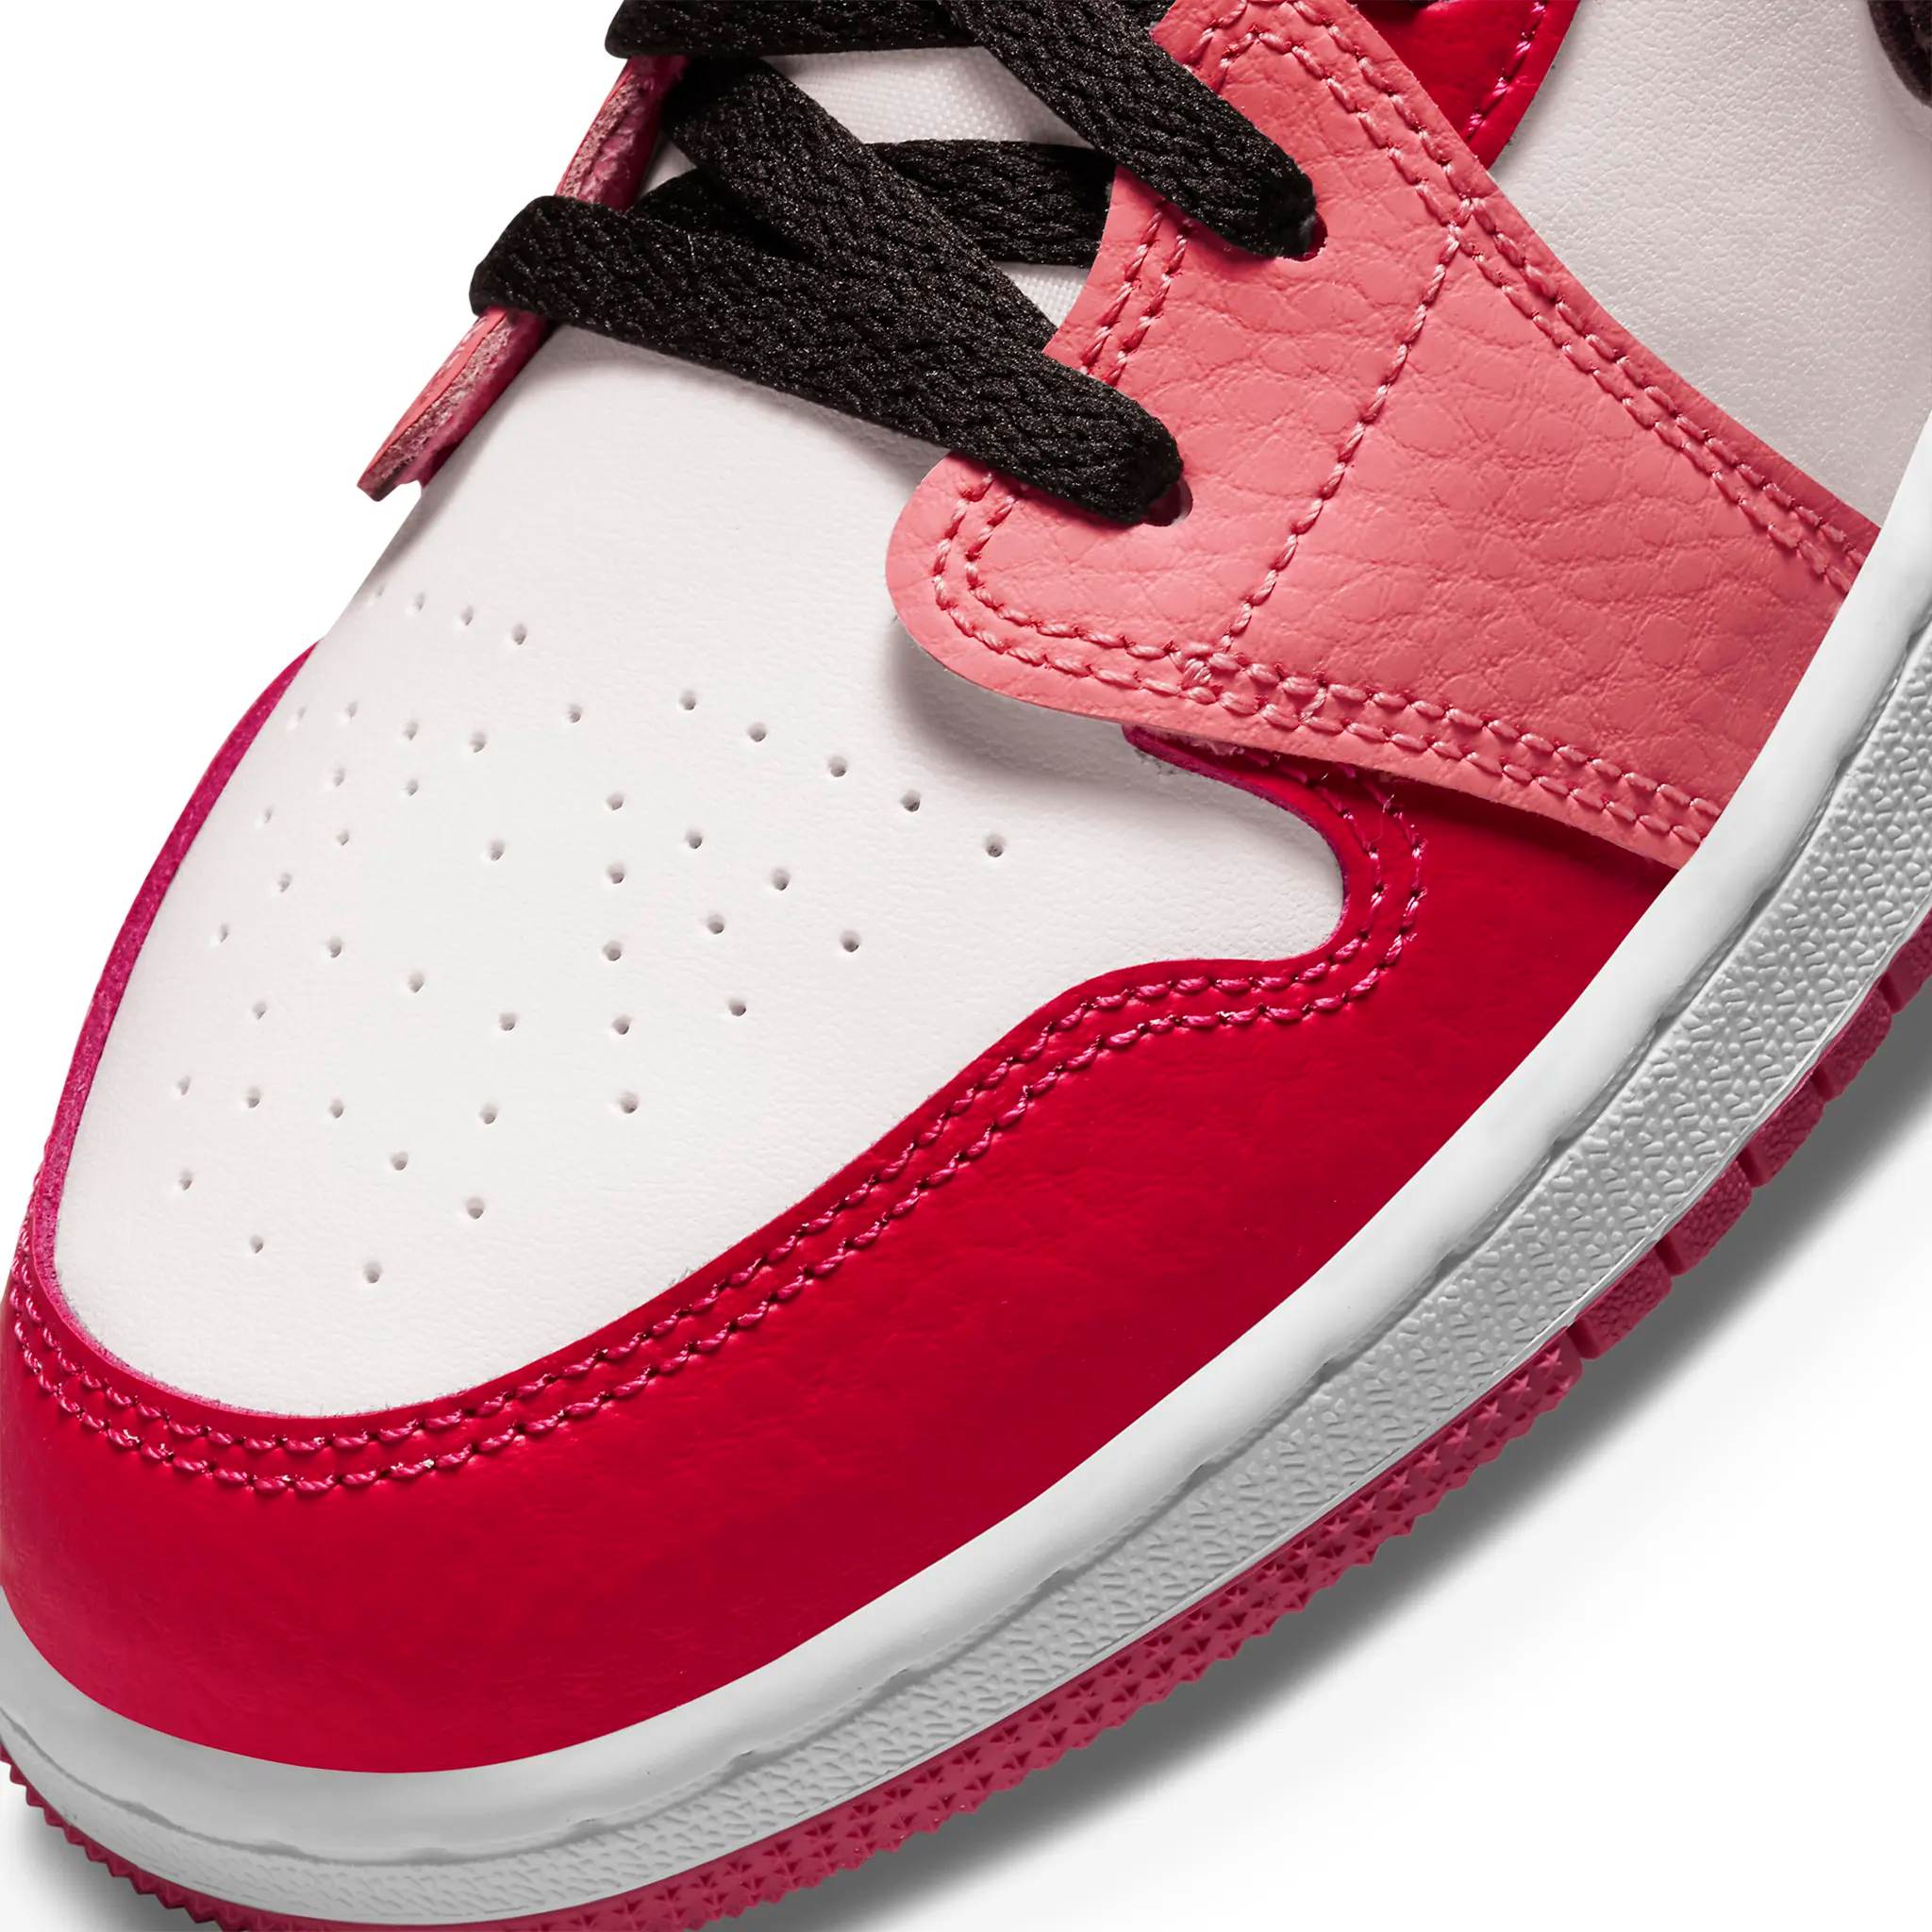 Front Detail view of Air Jordan 1 Low Pink Red (GS) 553560-162